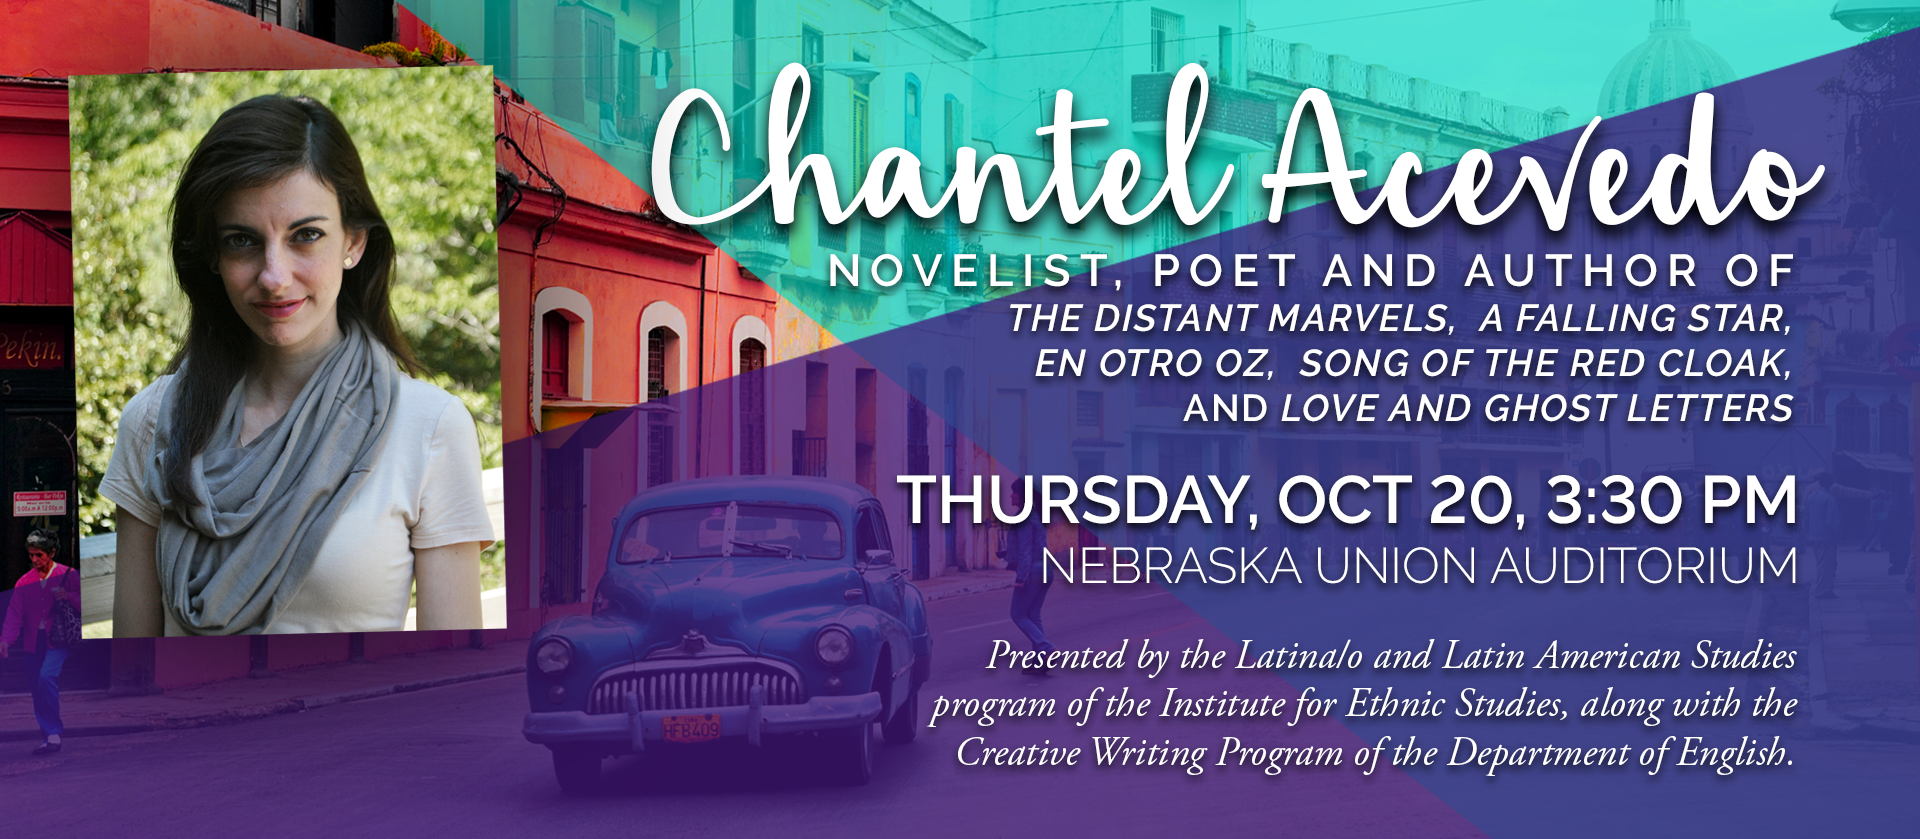 Poster for Chantel Acevedo Reading - info below